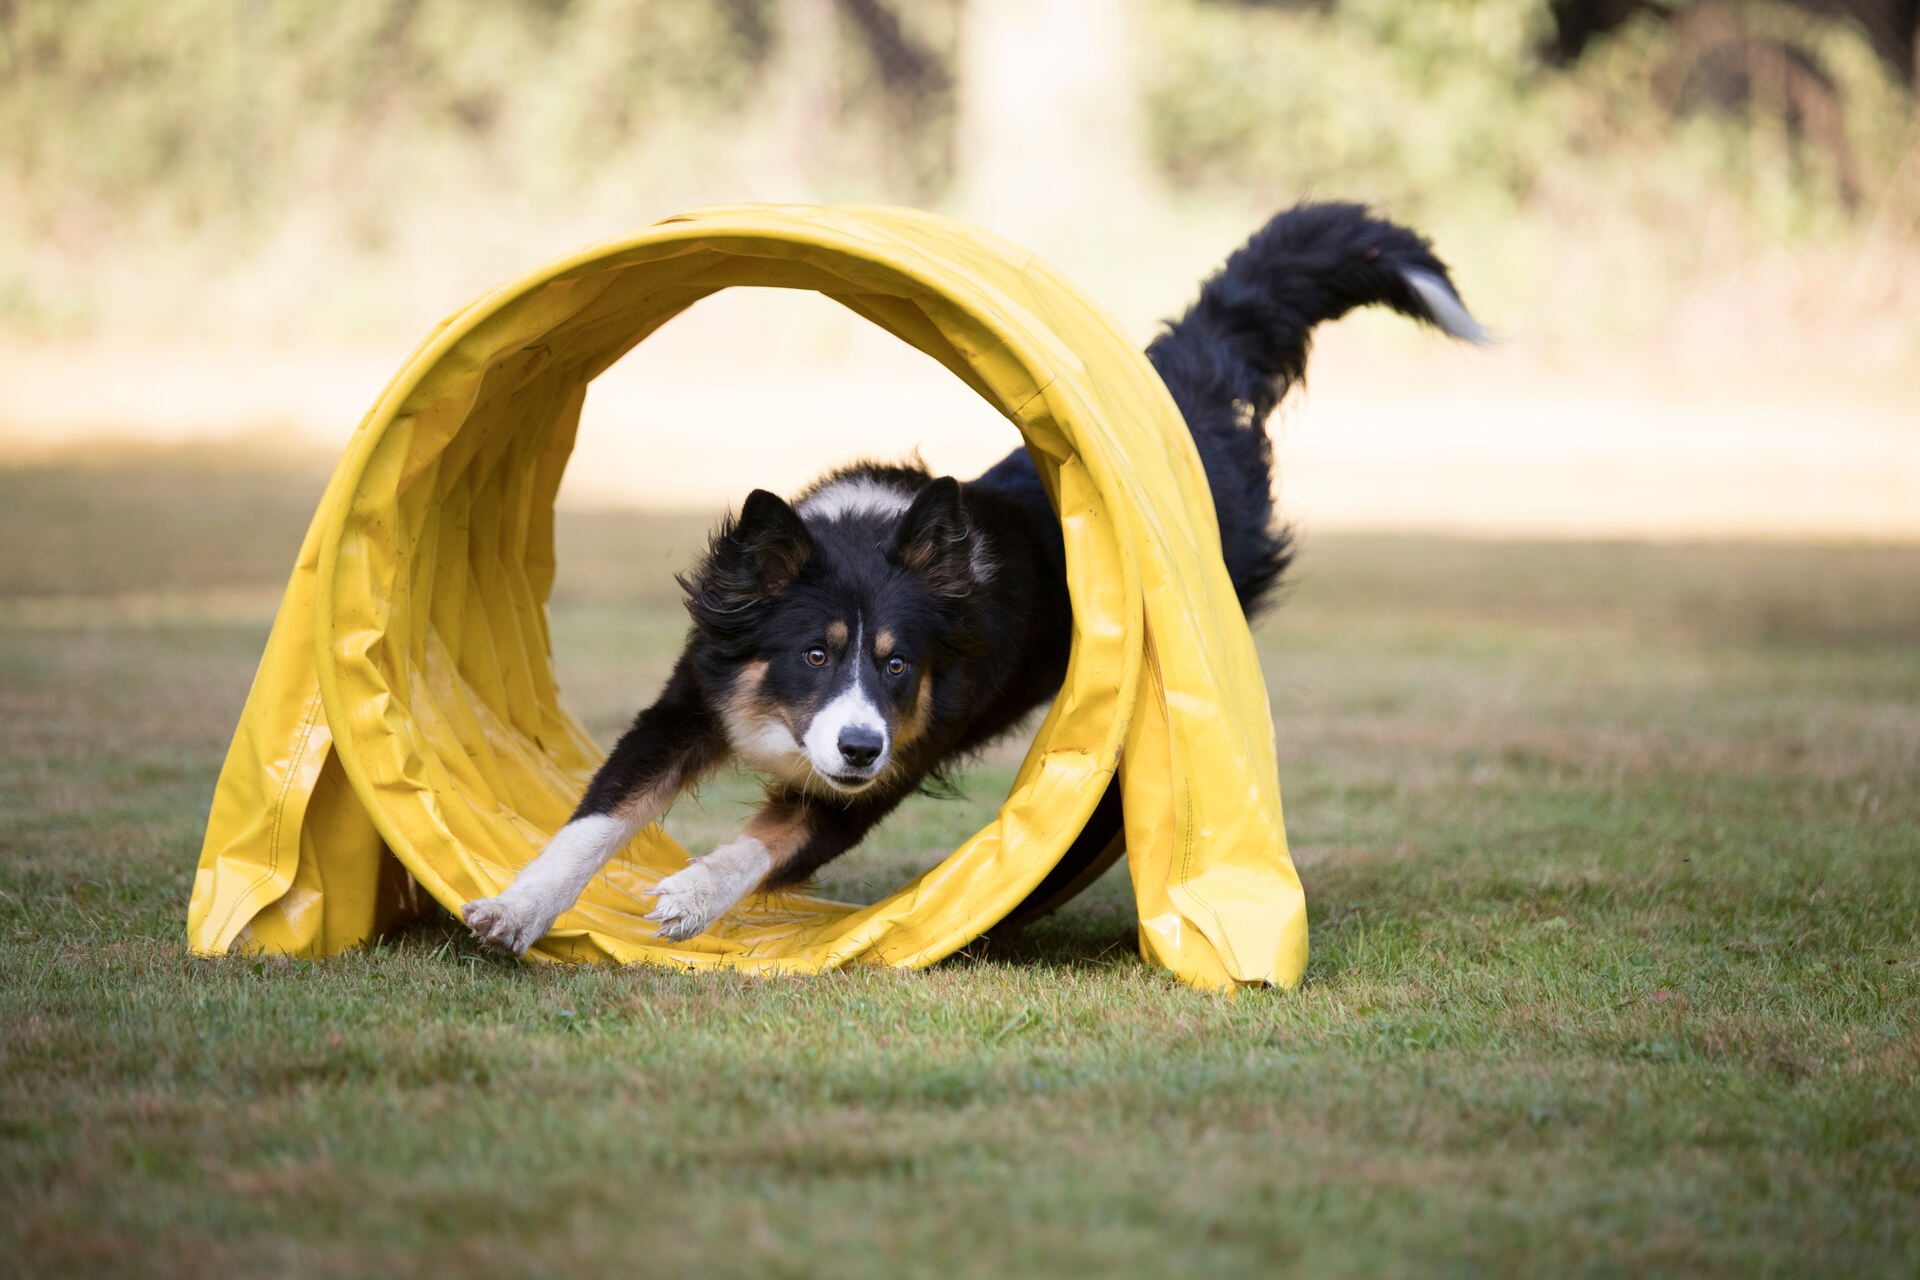 A Border collie running through an agility hoop in a backyard